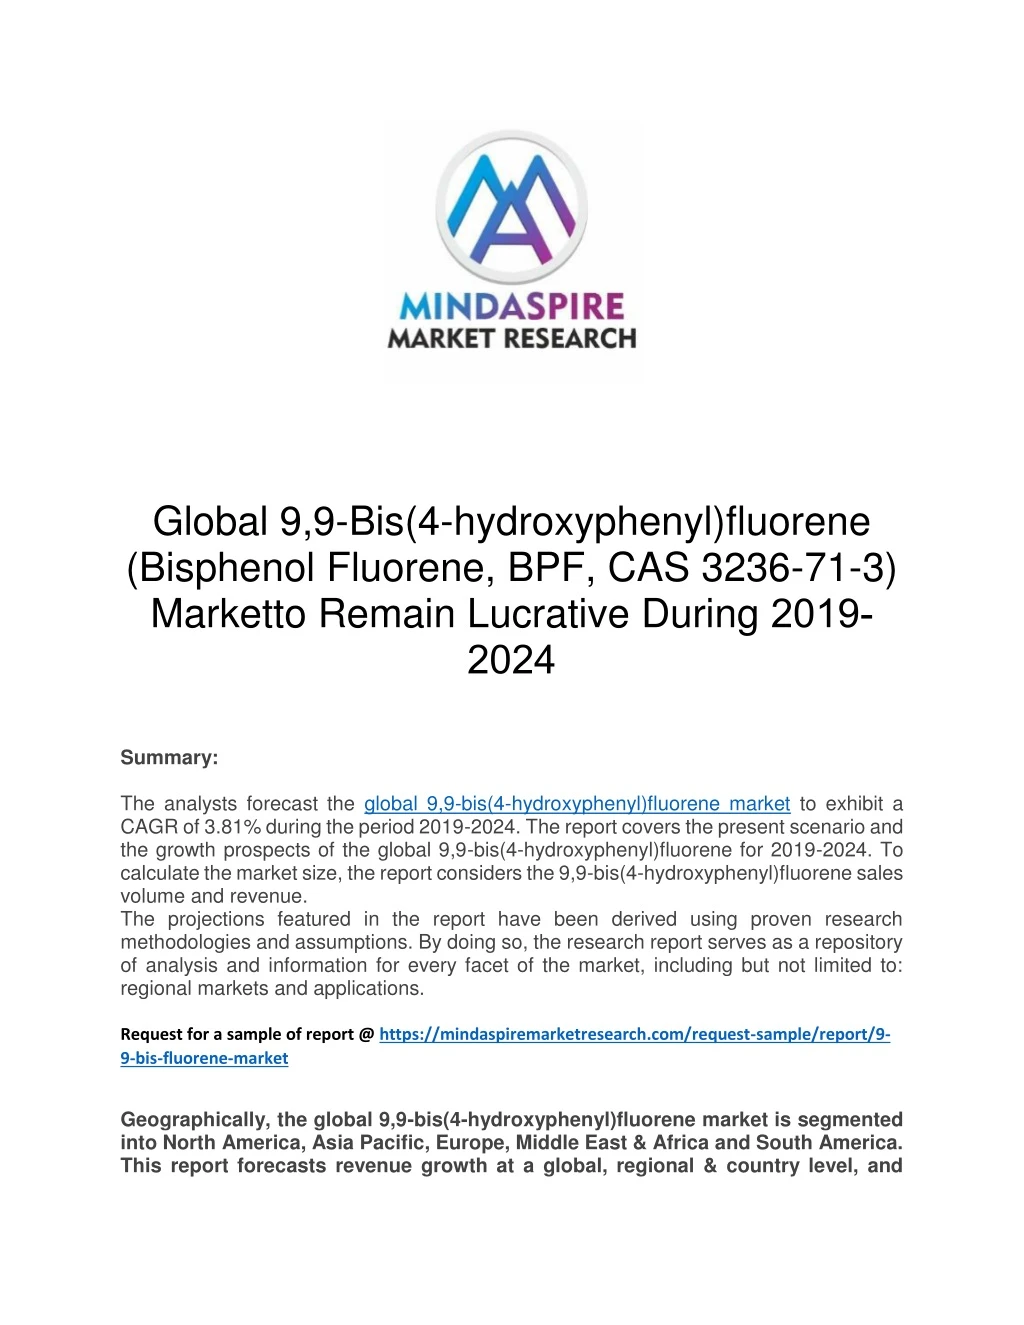 global 9 9 bis 4 hydroxyphenyl fluorene bisphenol